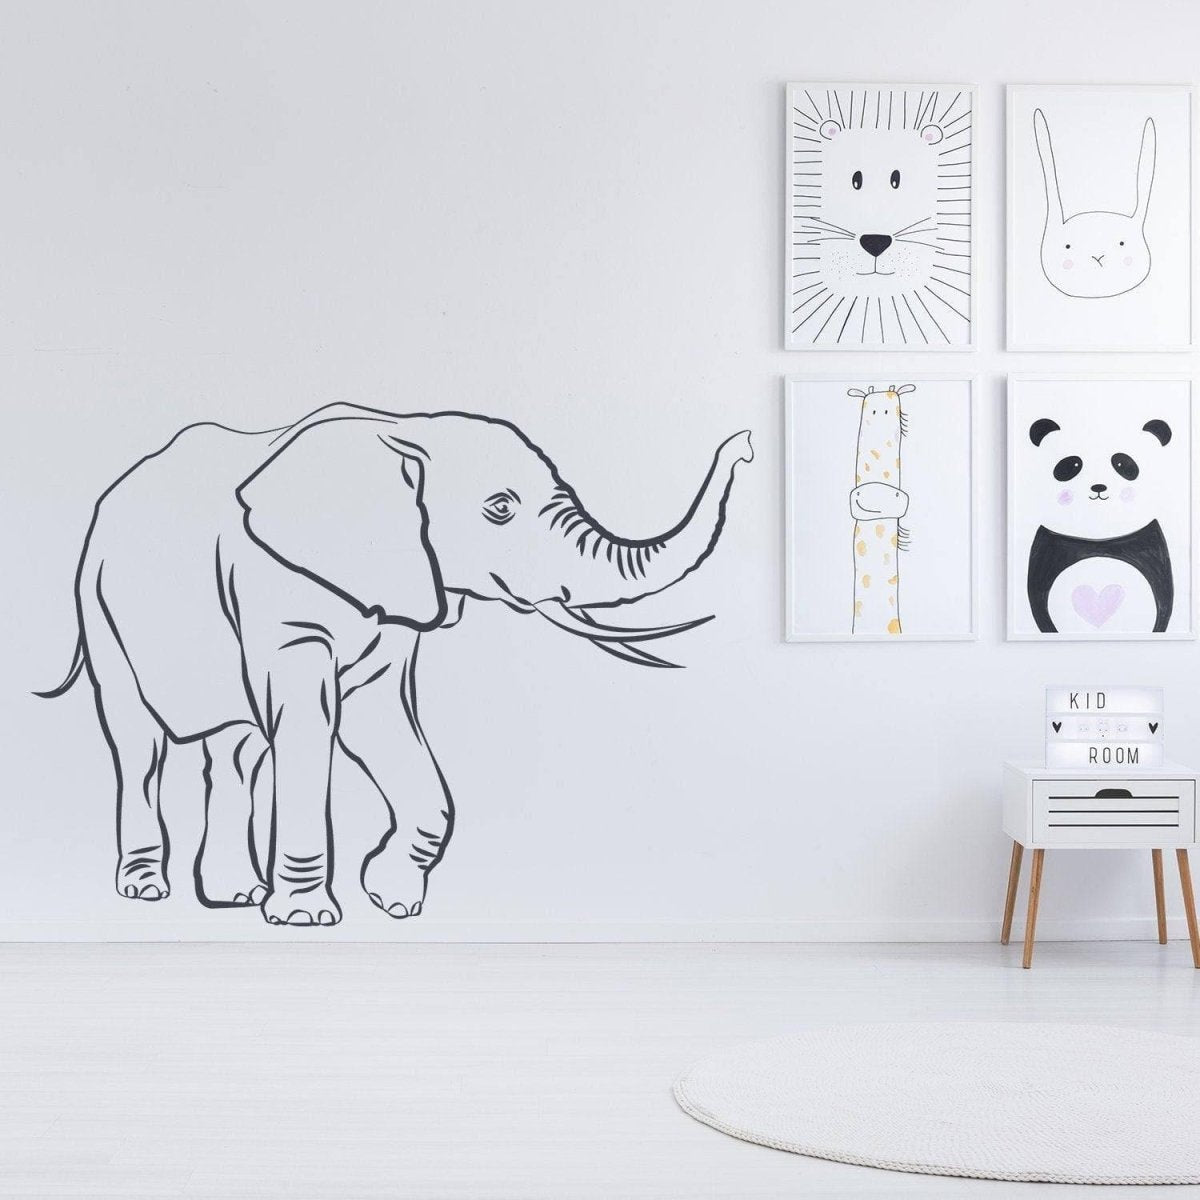 Adorable Elephant Decals - Premium Vinyl Wall Stickers - Decords